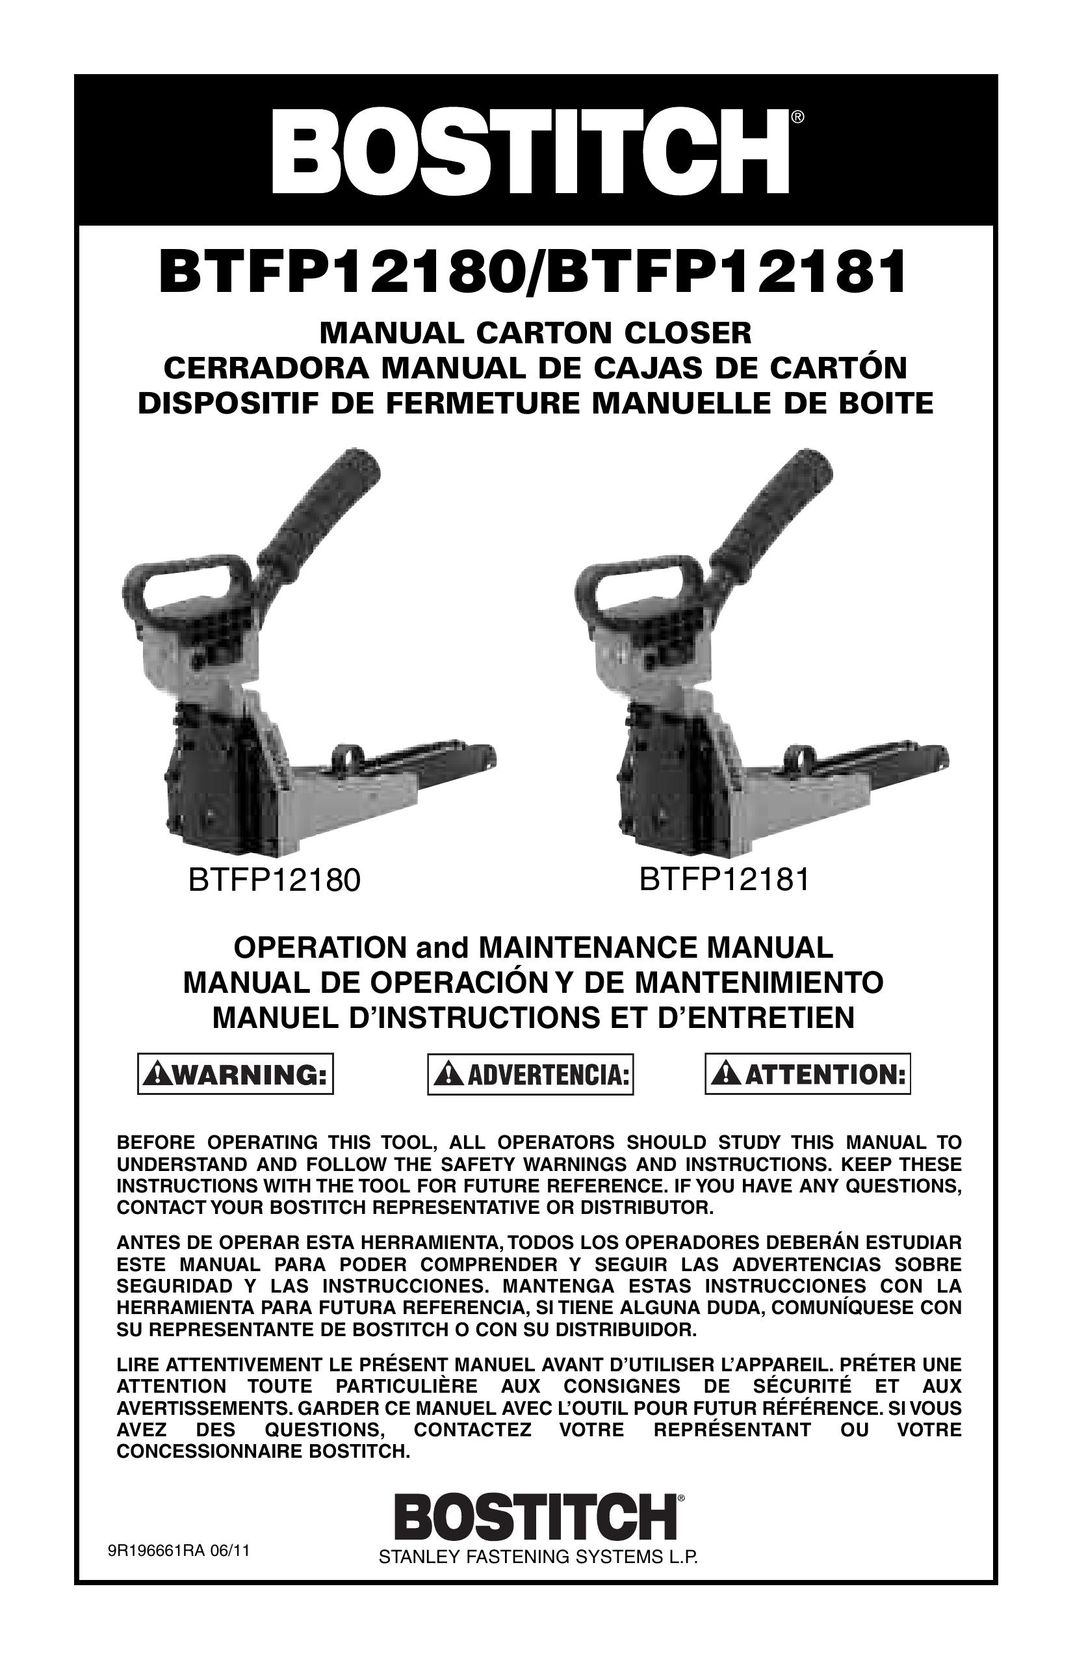 Bostitch BTFP12180 Staple Gun User Manual